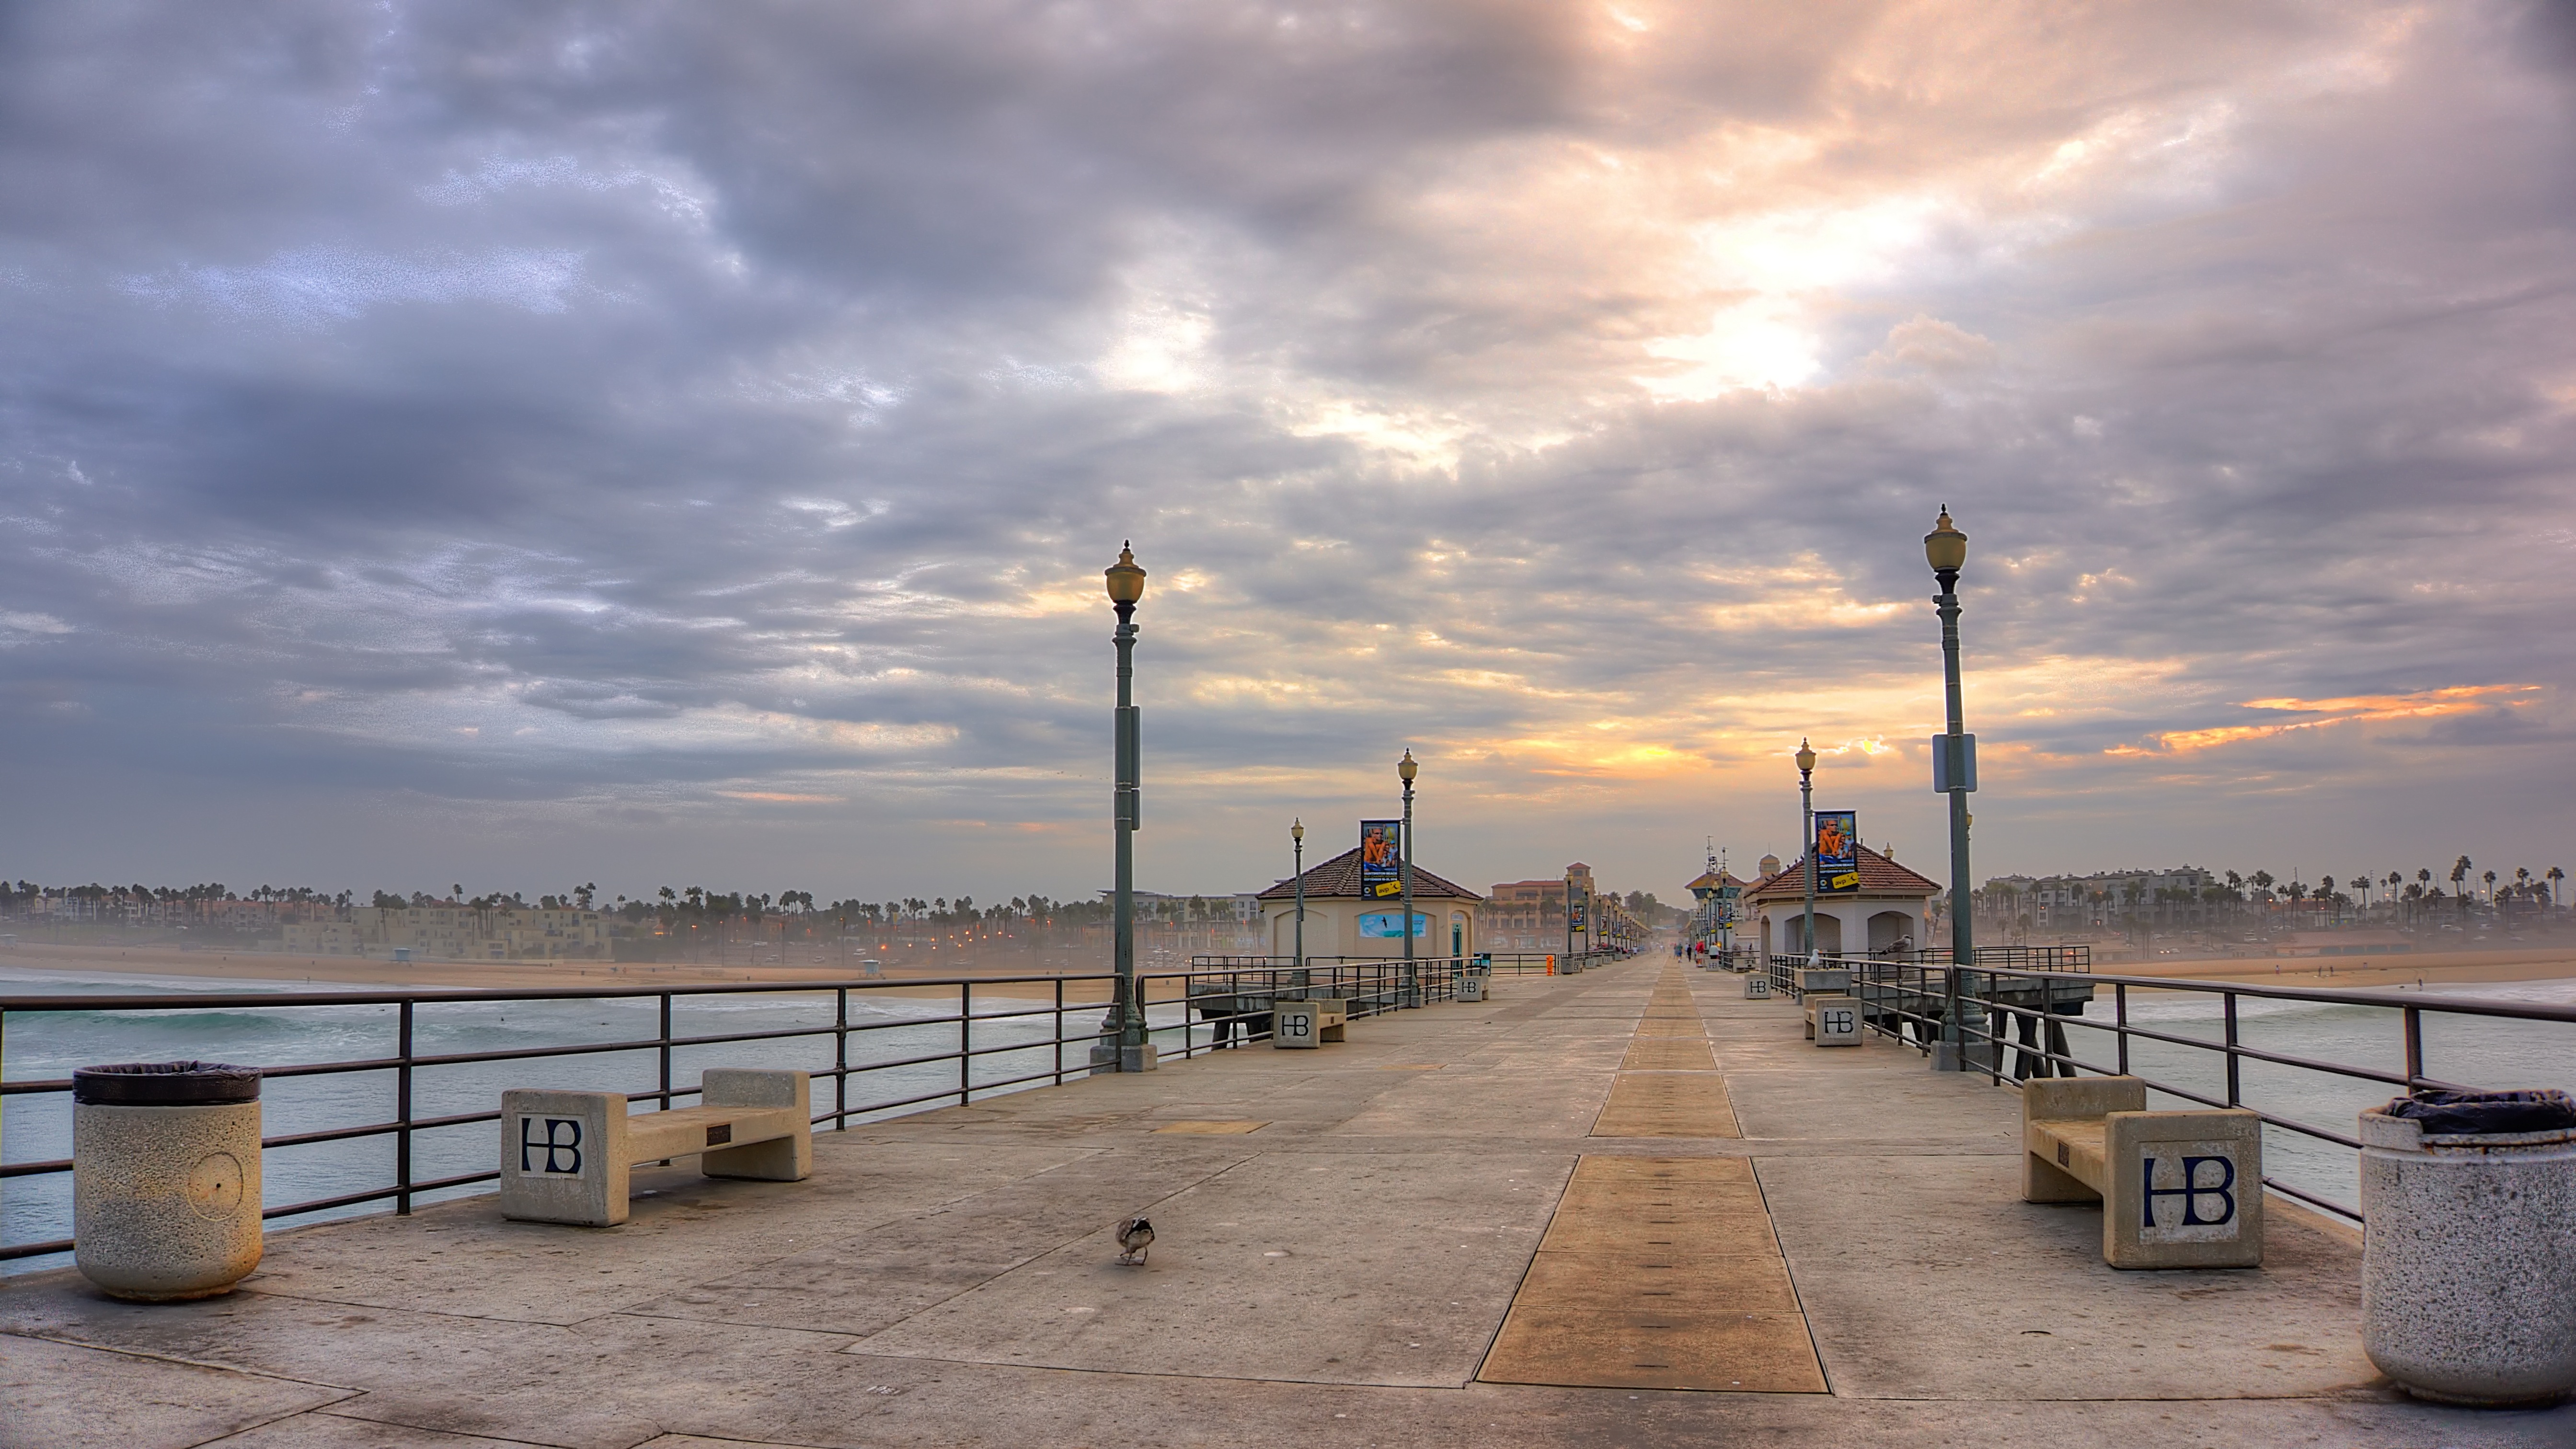 File:Huntington Beach Pier at Sunrise (2014).jpg - Wikimedia Commons